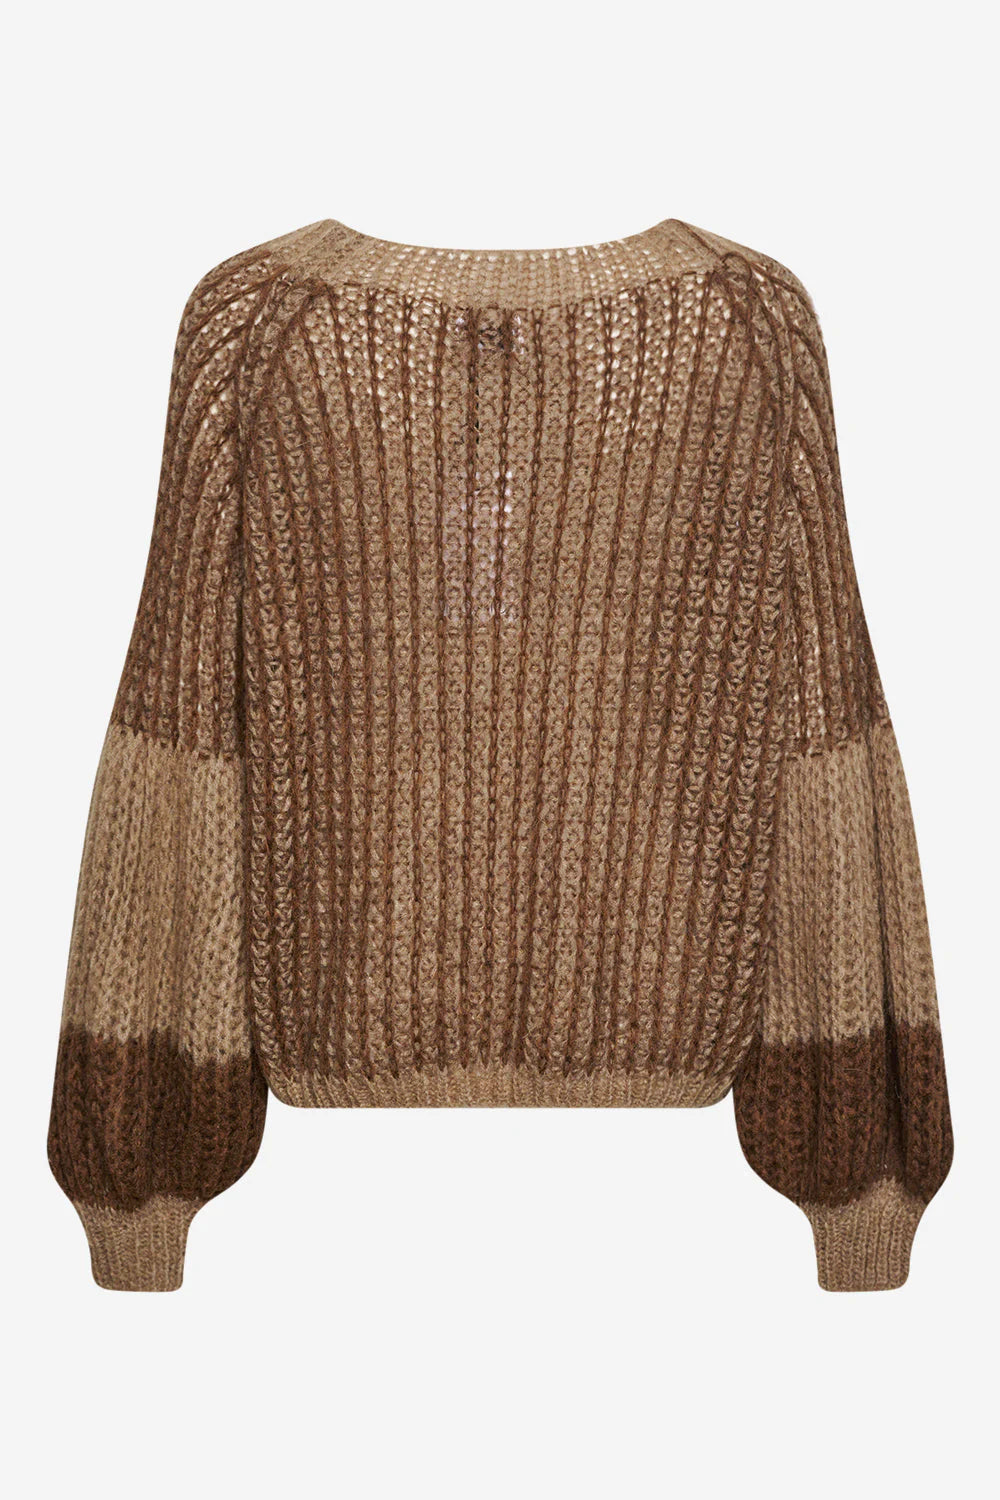 Noella Liana Knit Sweater Brown/Camel - hvittrad.no